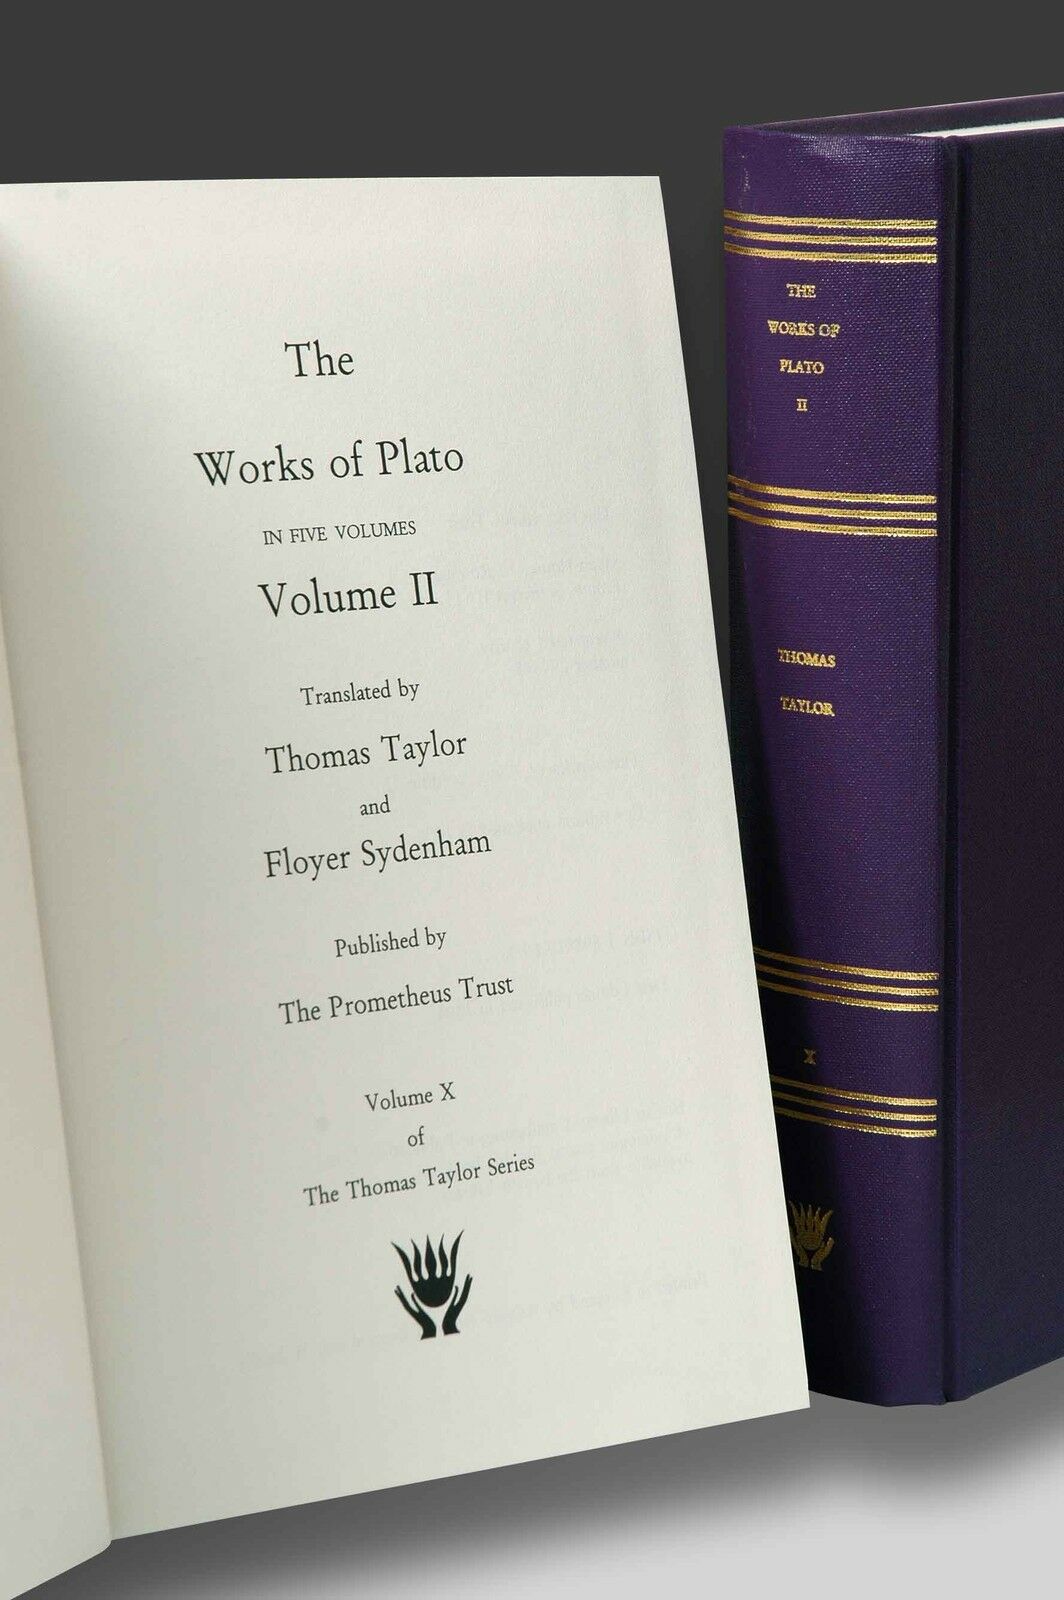 The Works of Plato, volume II (Thomas Taylor Series, volume X)